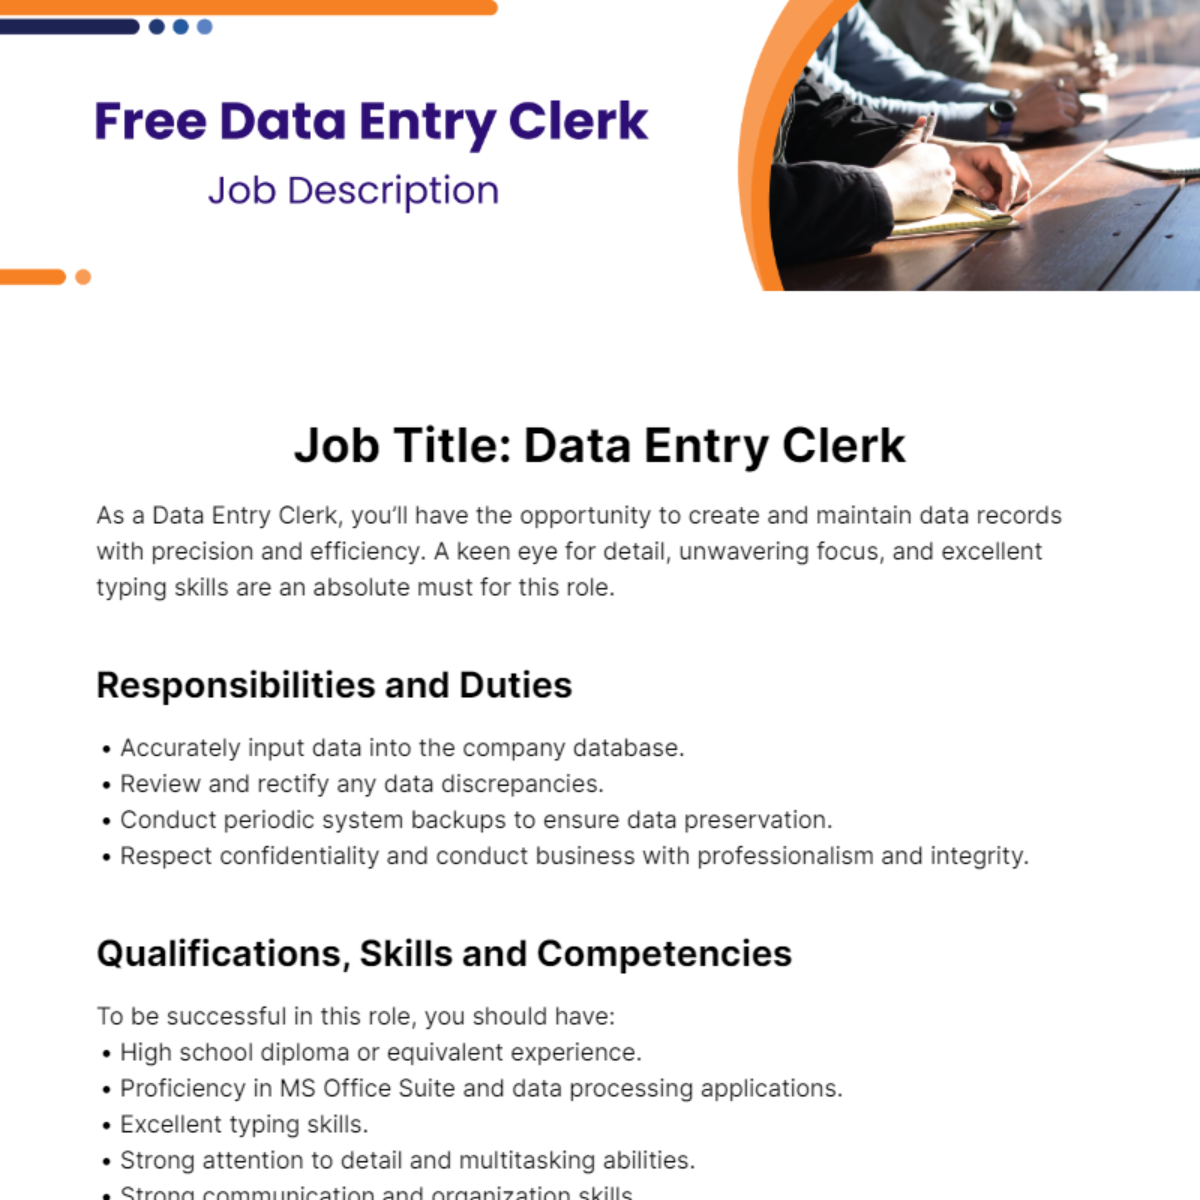 Free Data Entry Clerk Job Description Template